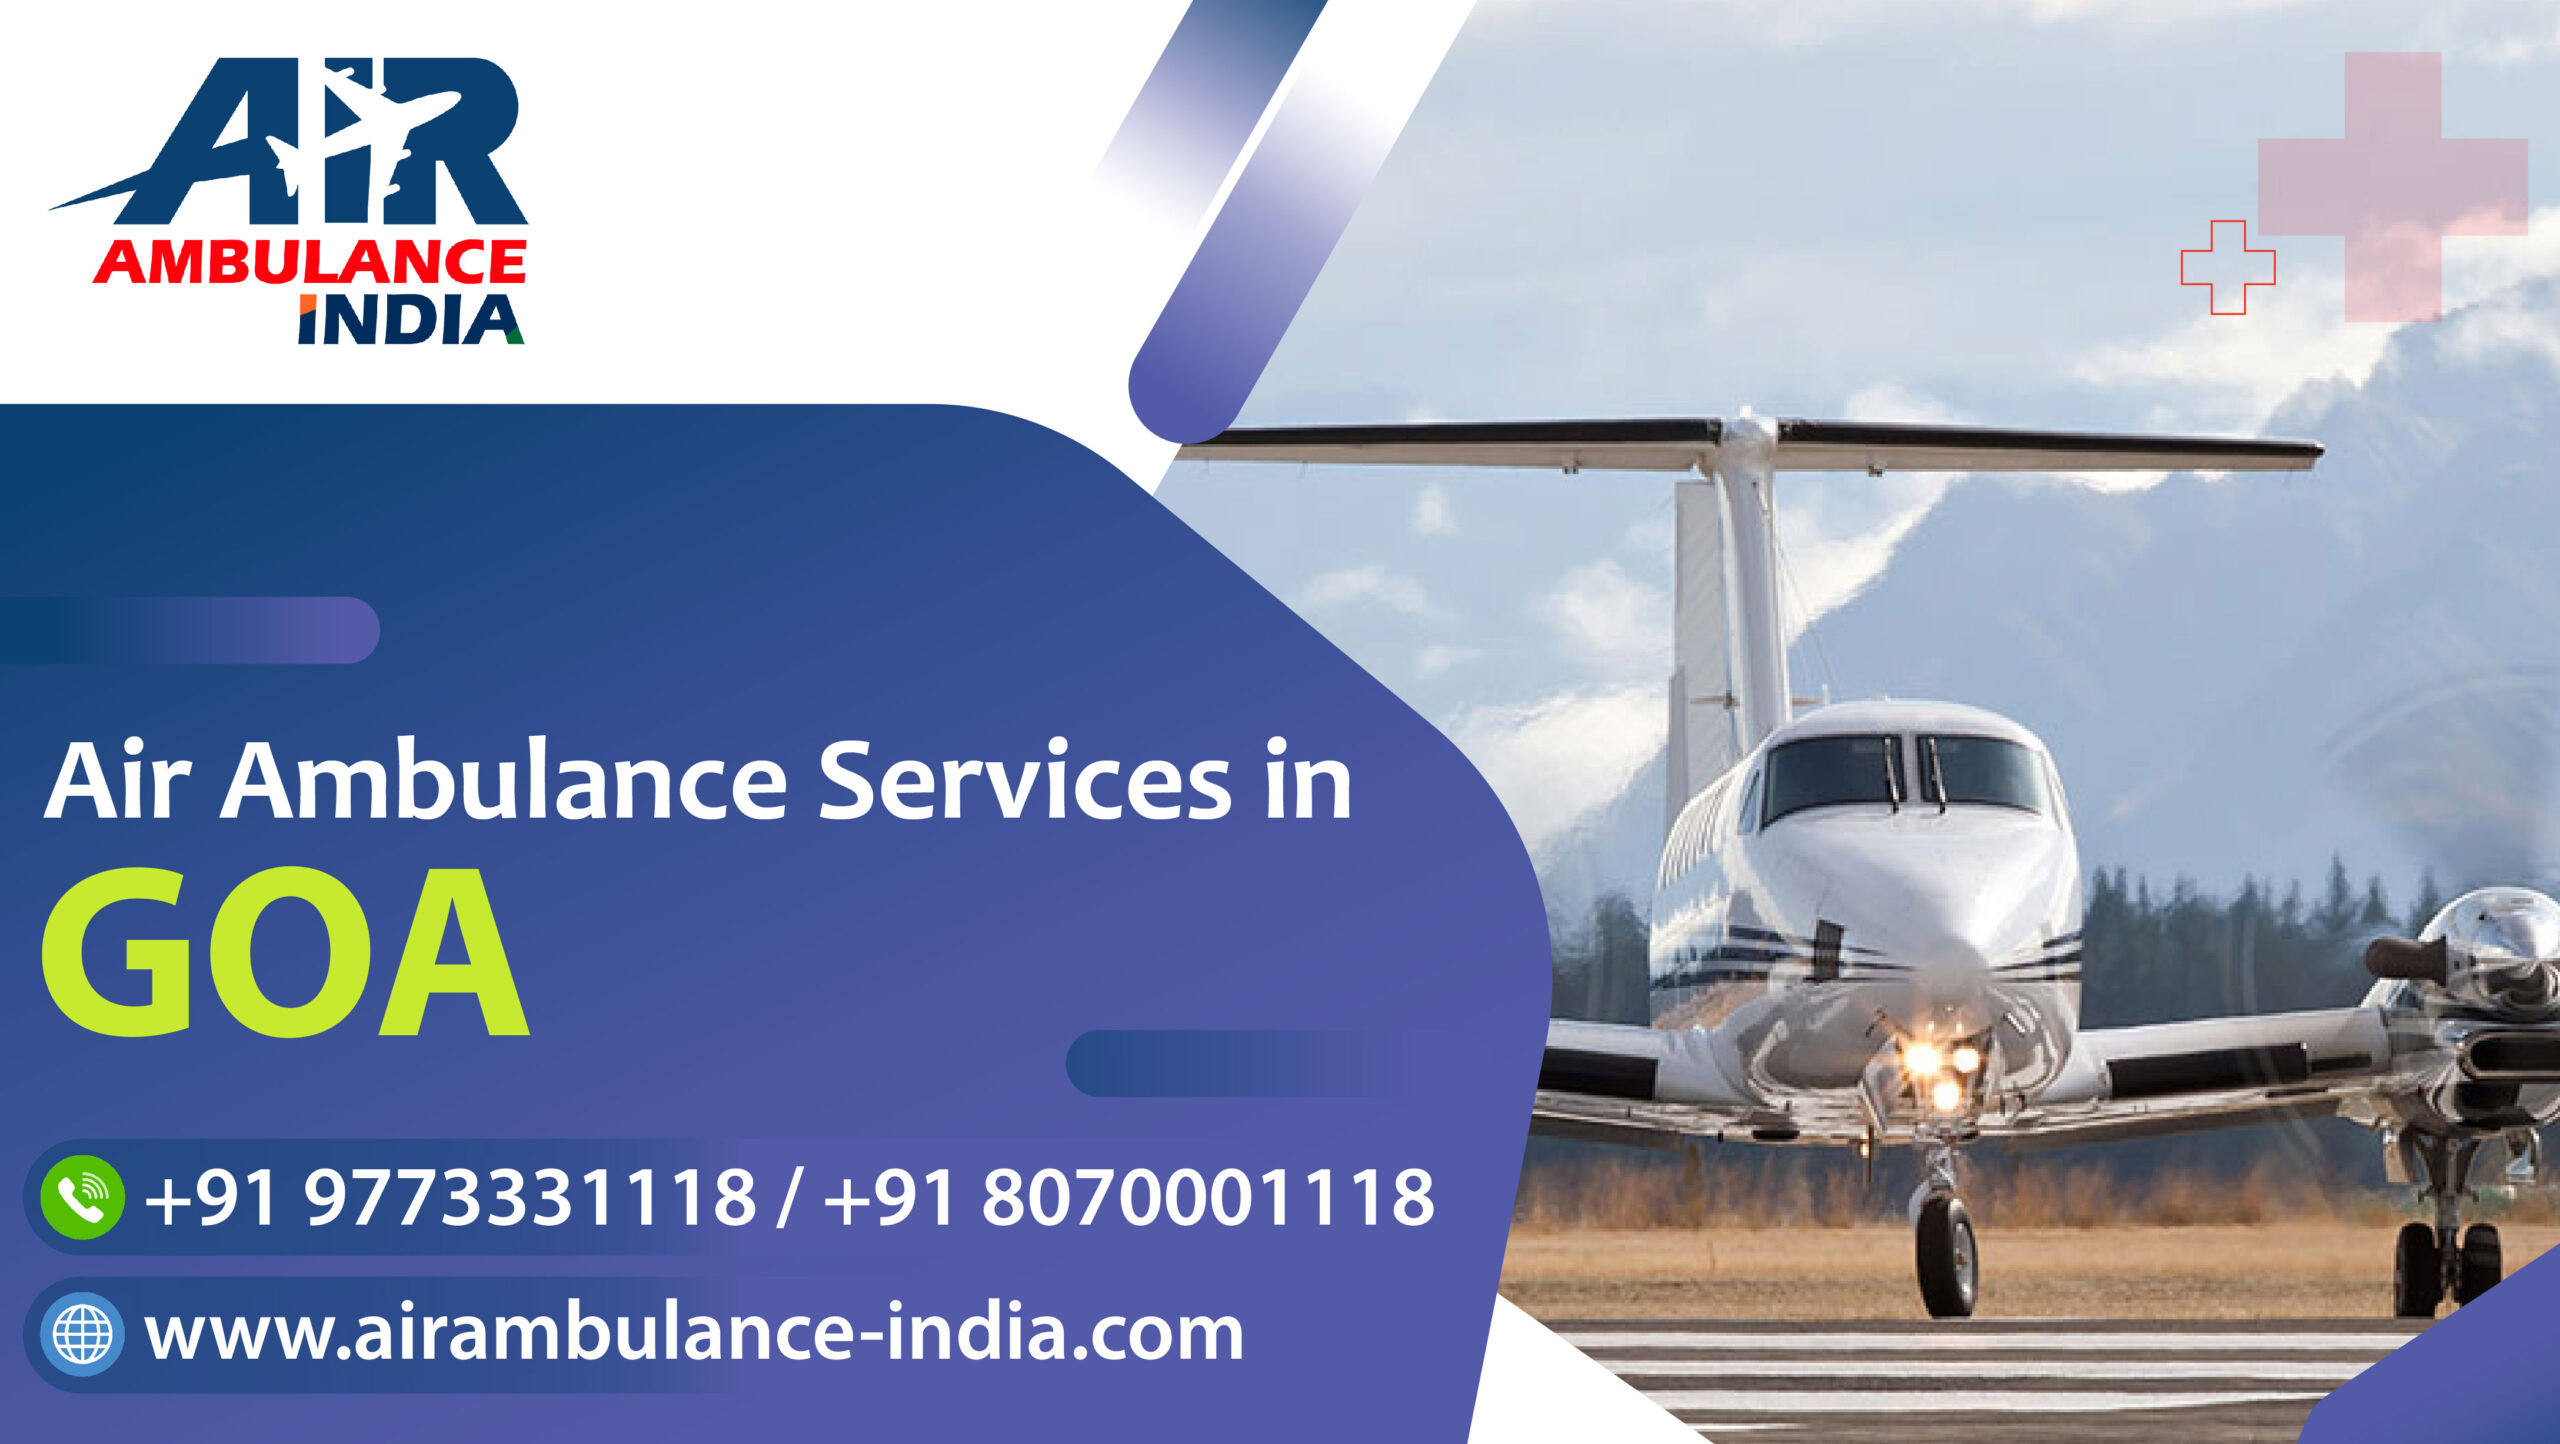 Air Ambulance Services in Goa